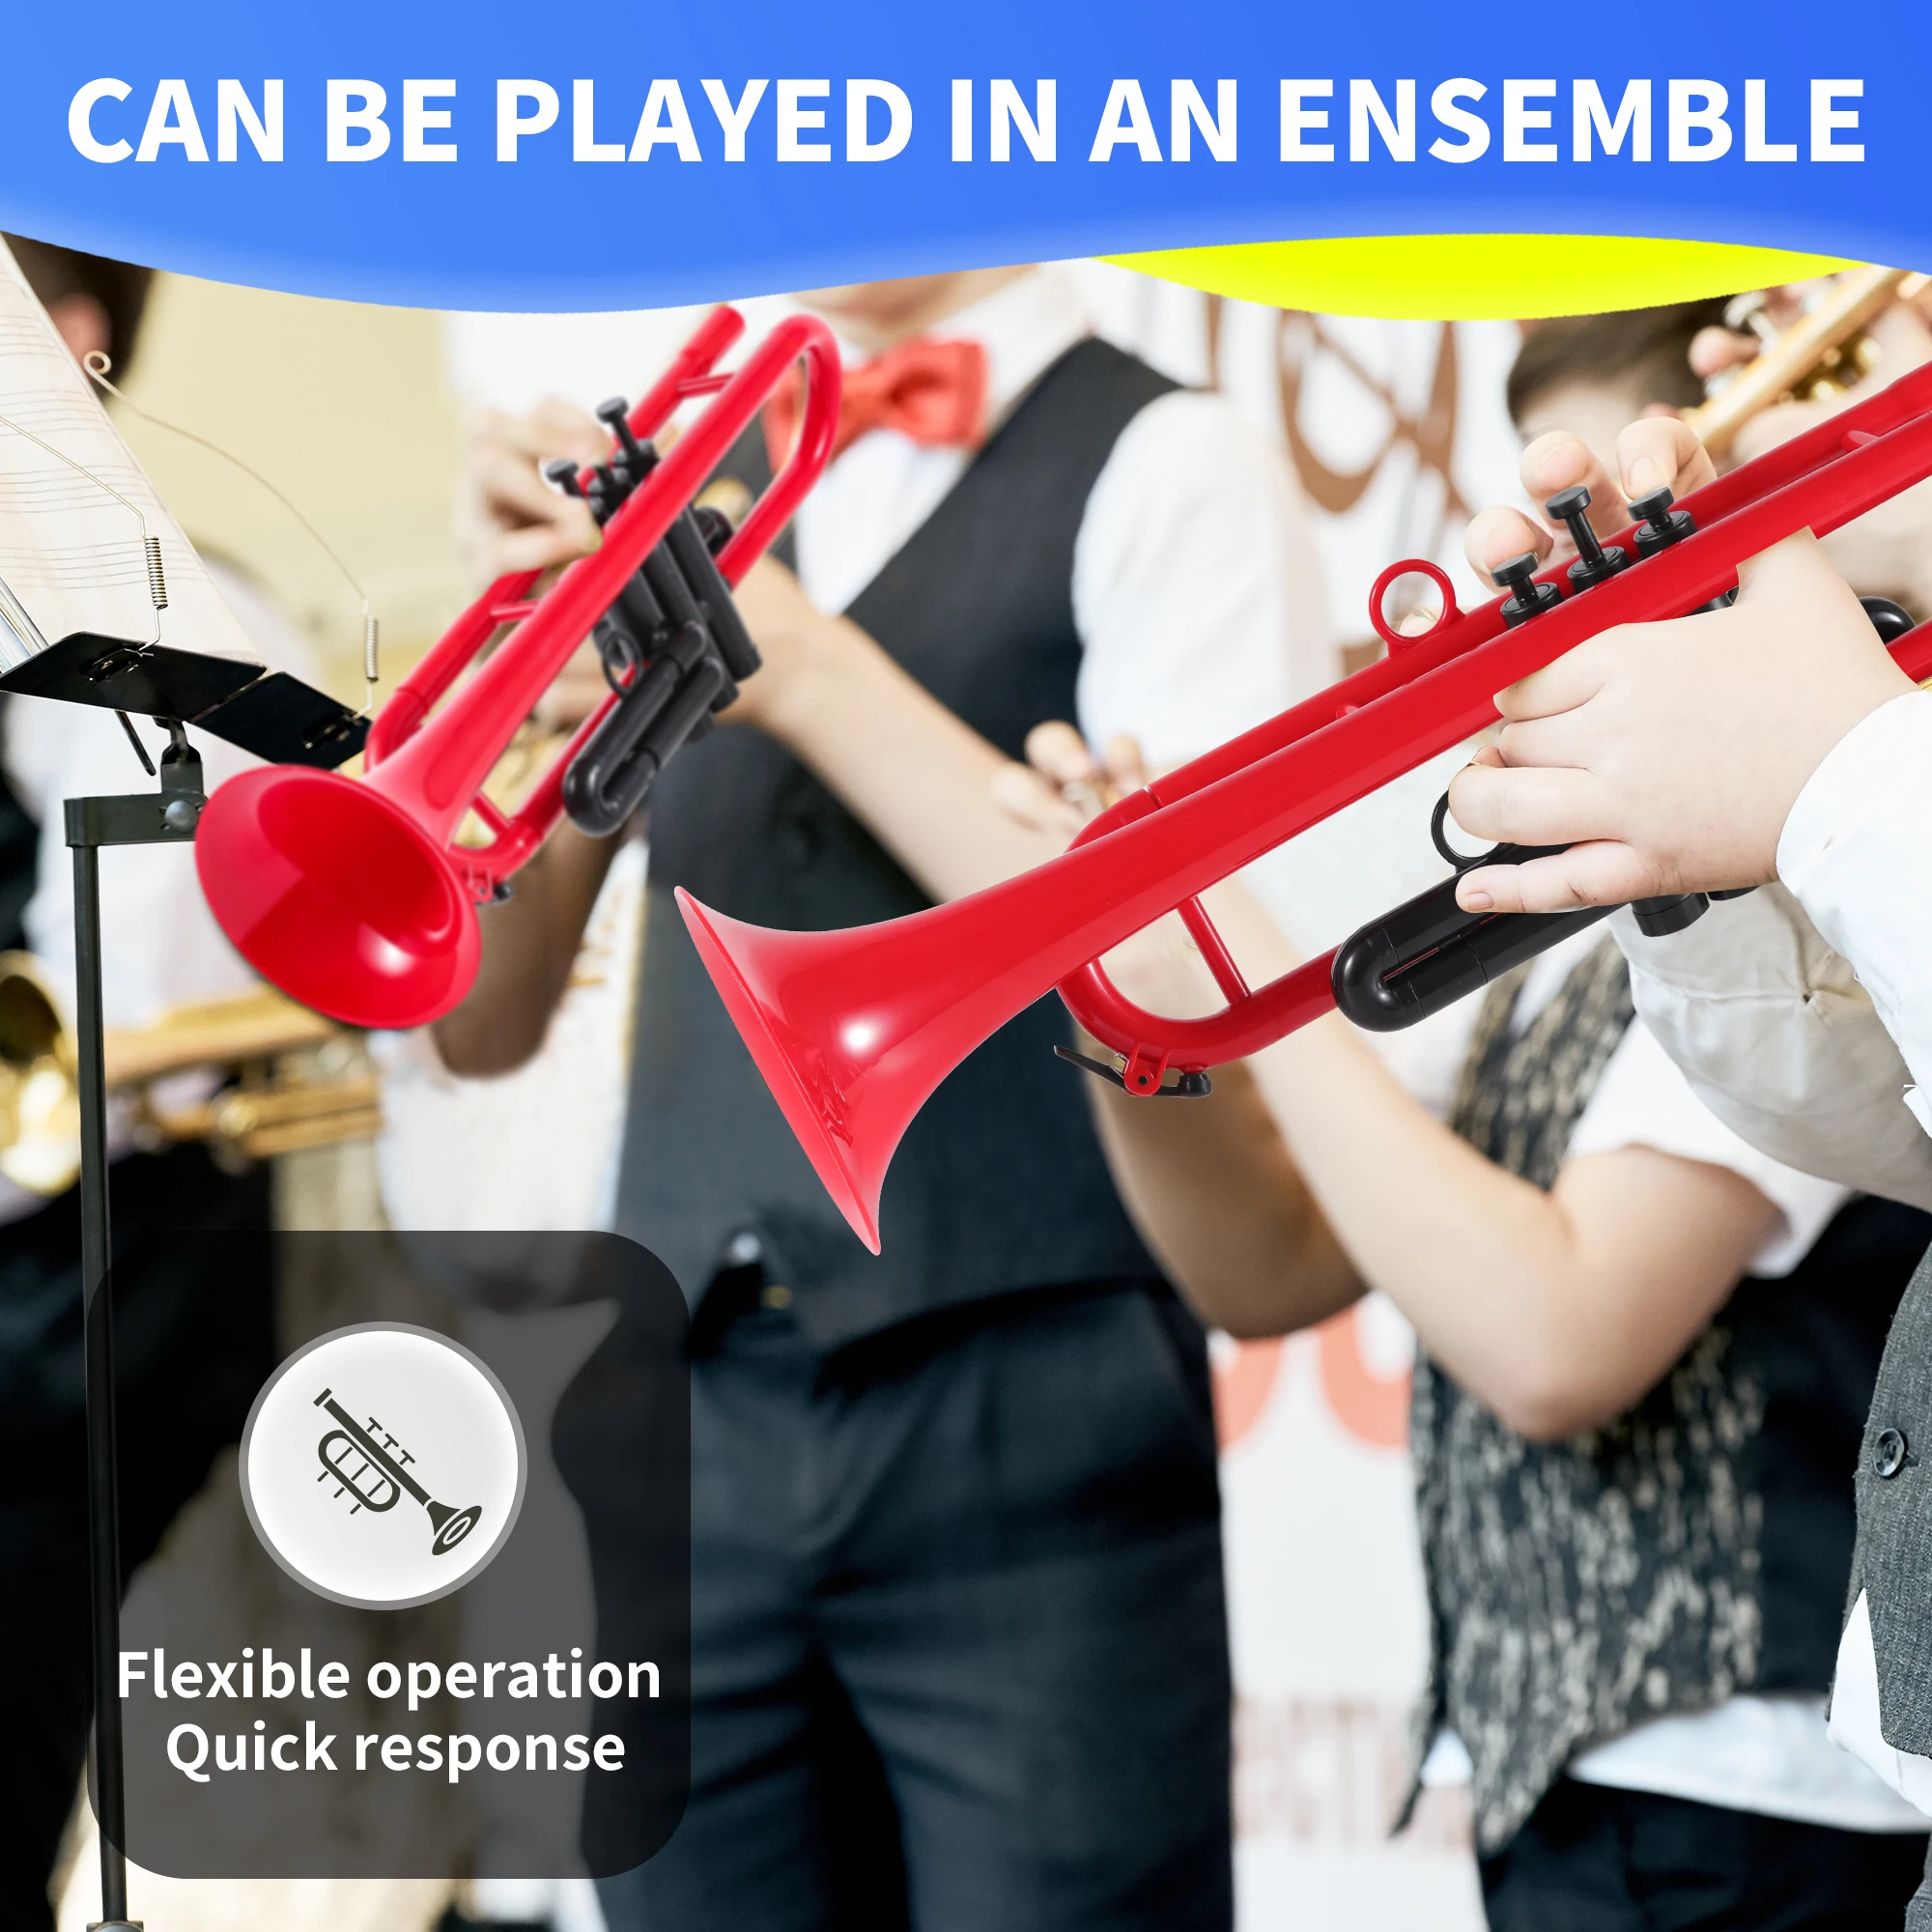 Bb Trumpet Standard Trumpet set with Carrying Case Lightweight Plastic Trumpet for Student Beginner Musical Instrument